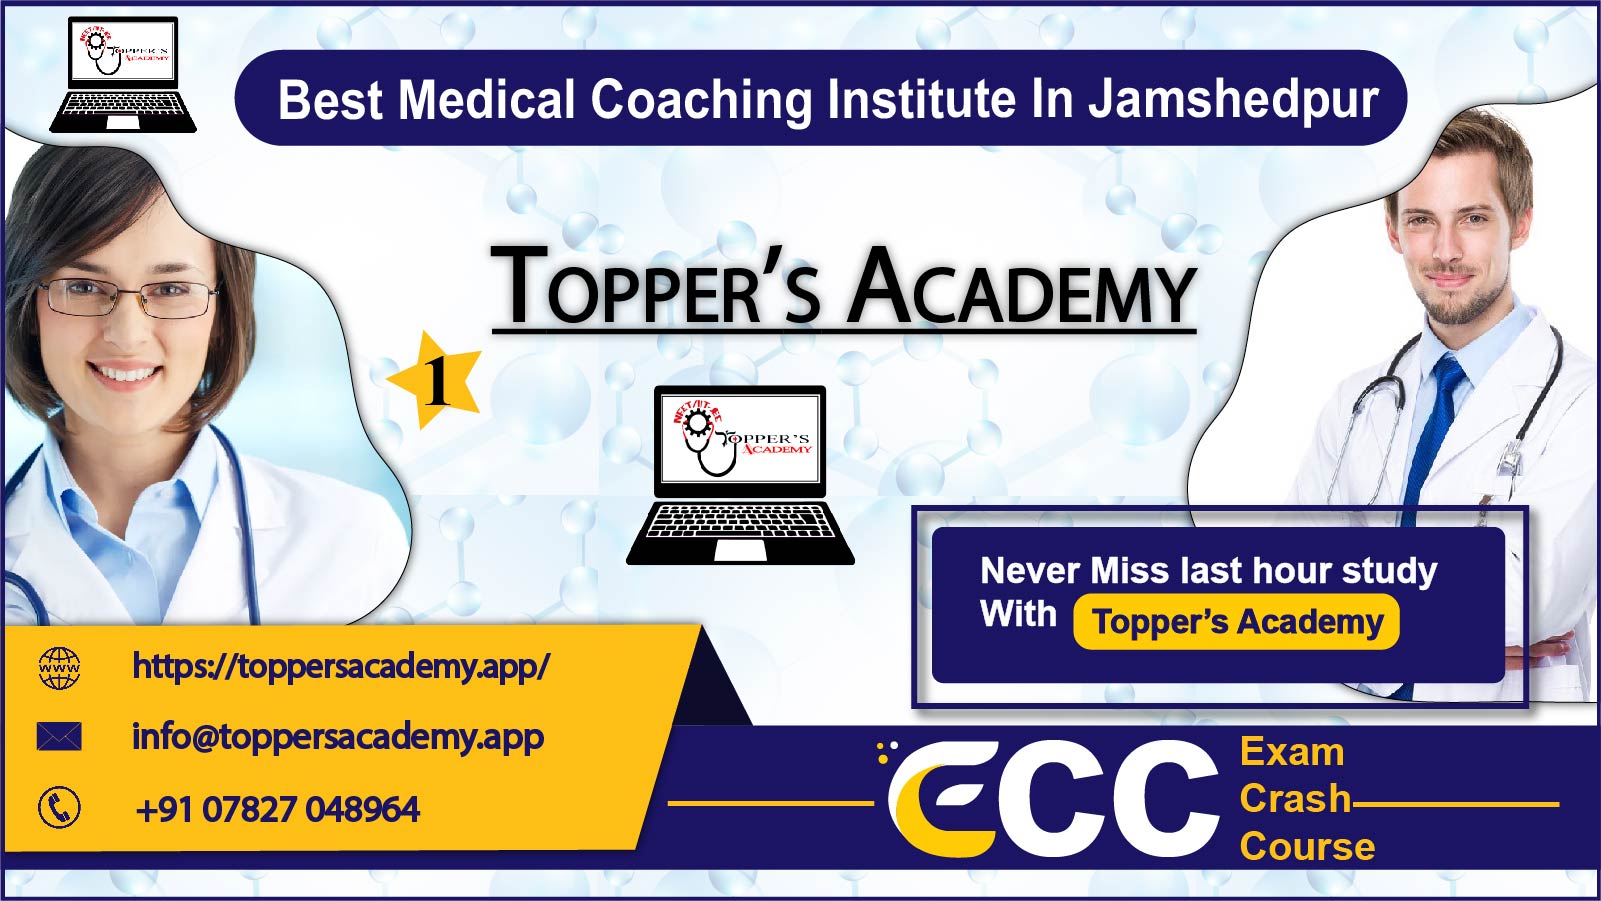 Top Medical Coaching Institute In Jamshedpur